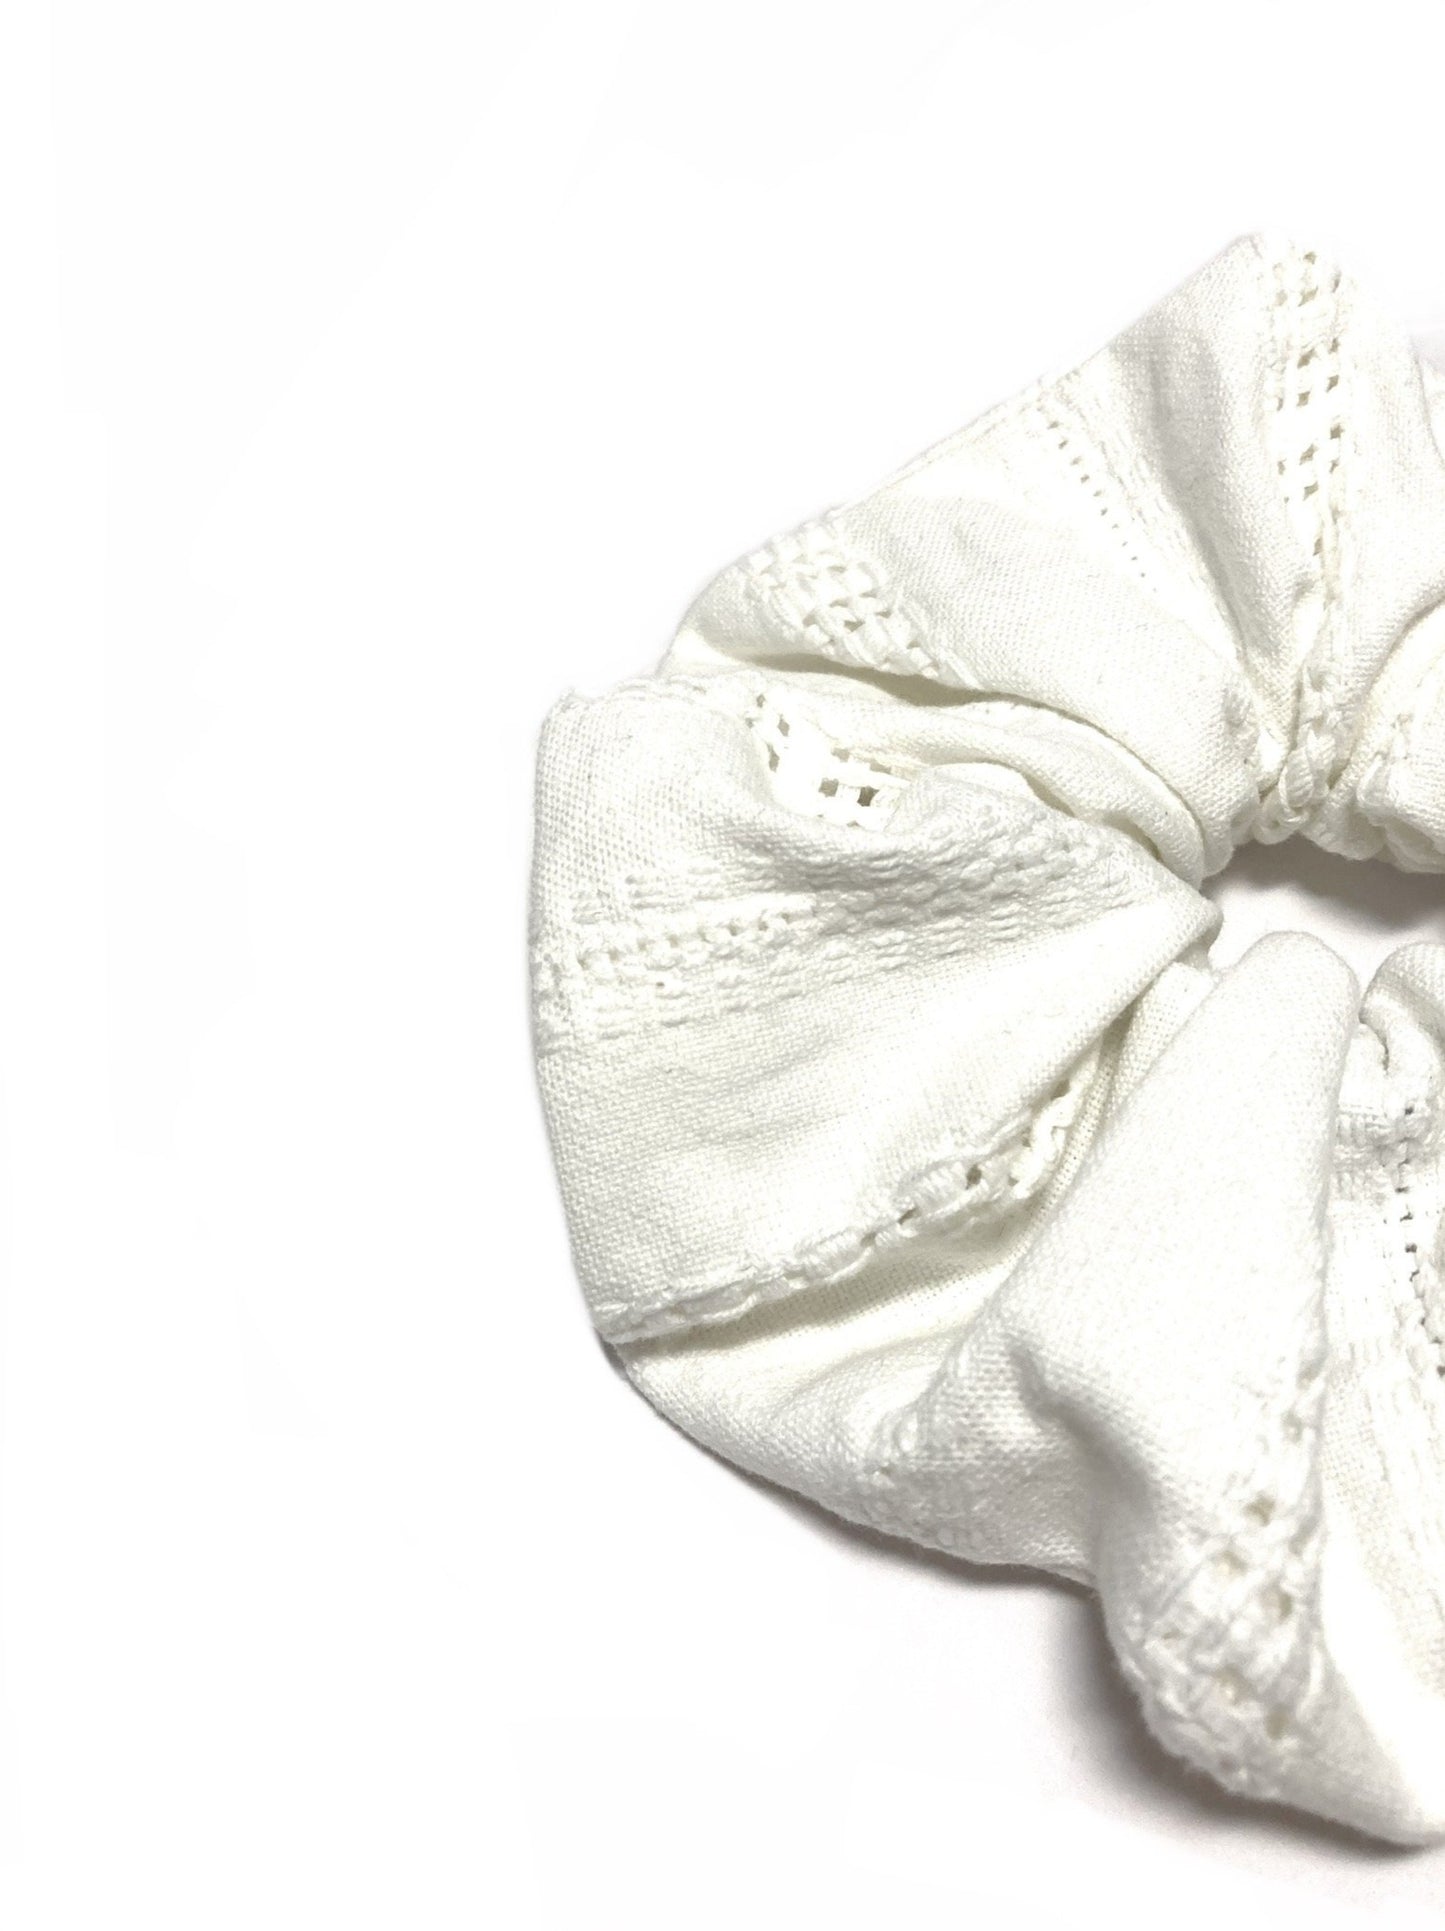 Ivory wedding scrunchie